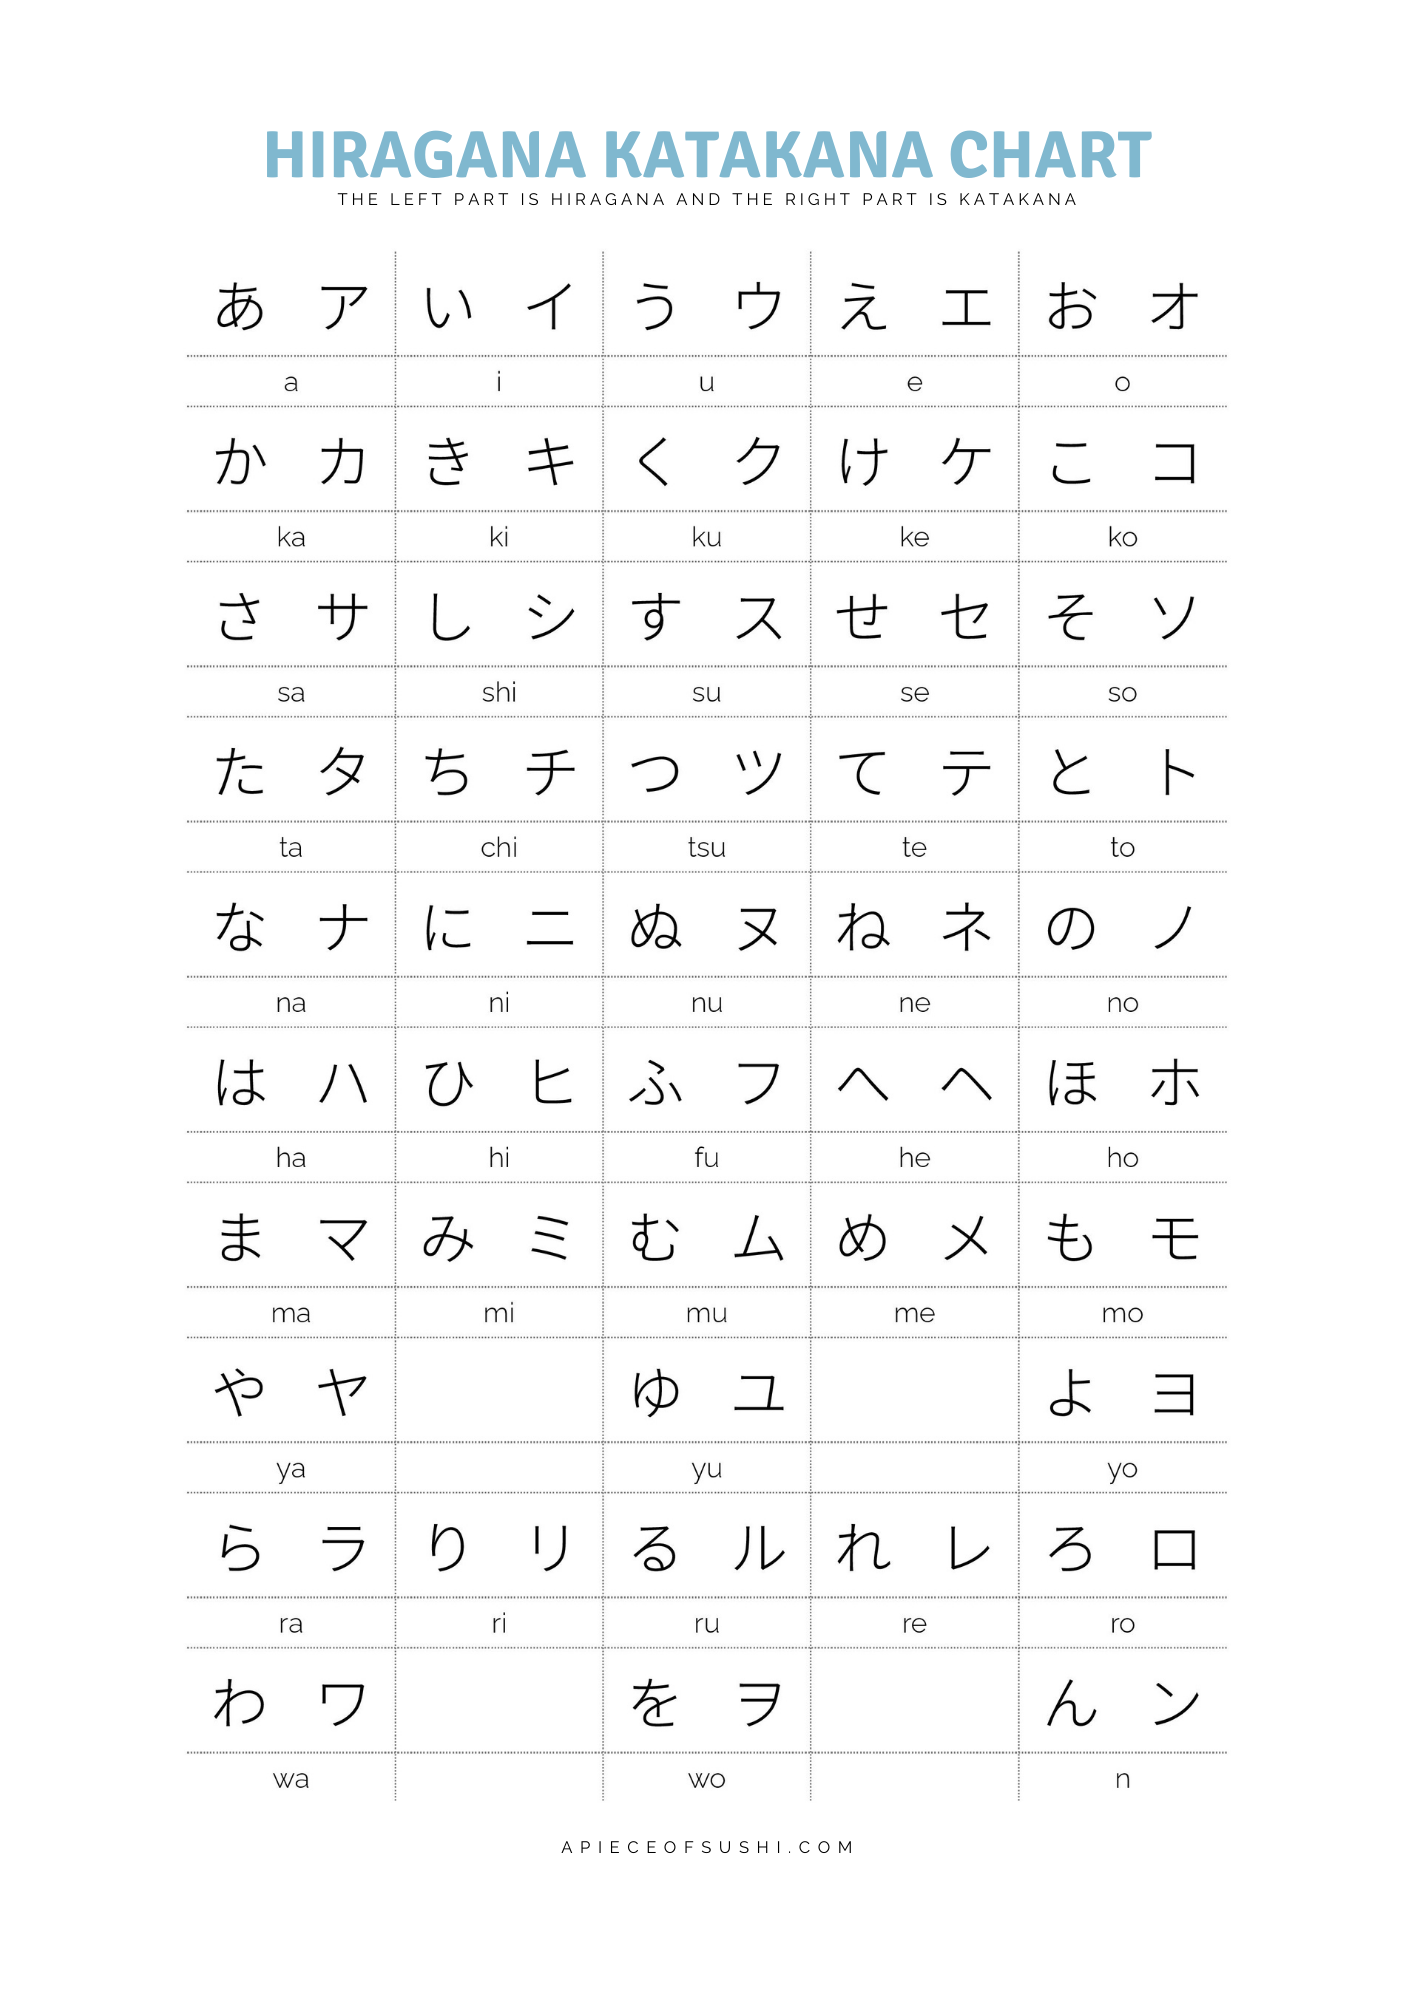 hiragana katakana chart free download printable pdf with 3